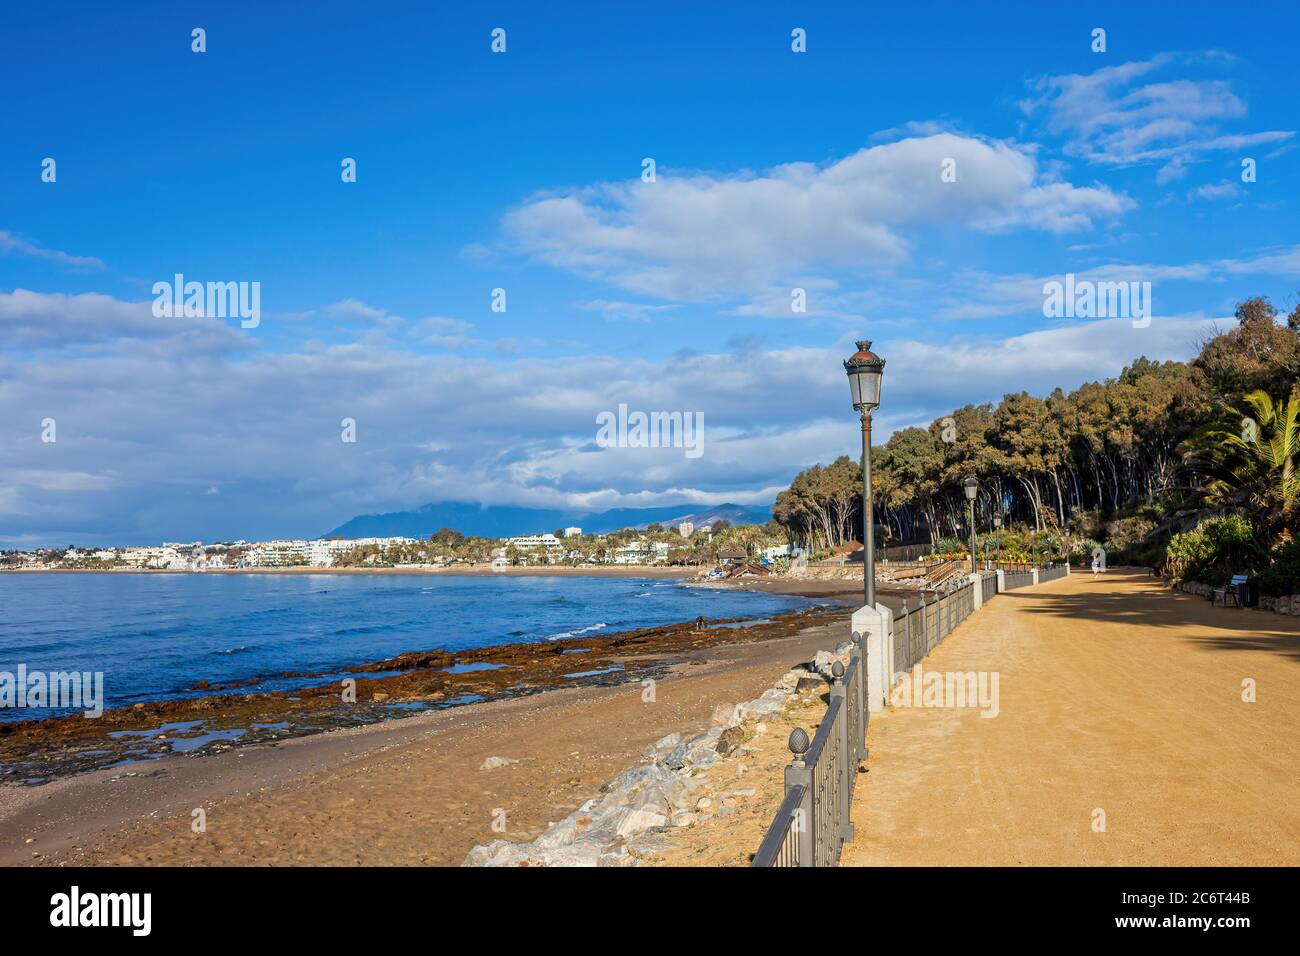 Promenade le long de la mer en direction de Puerto Banus, Costa del sol, Marbella, Andalousie, Espagne Banque D'Images